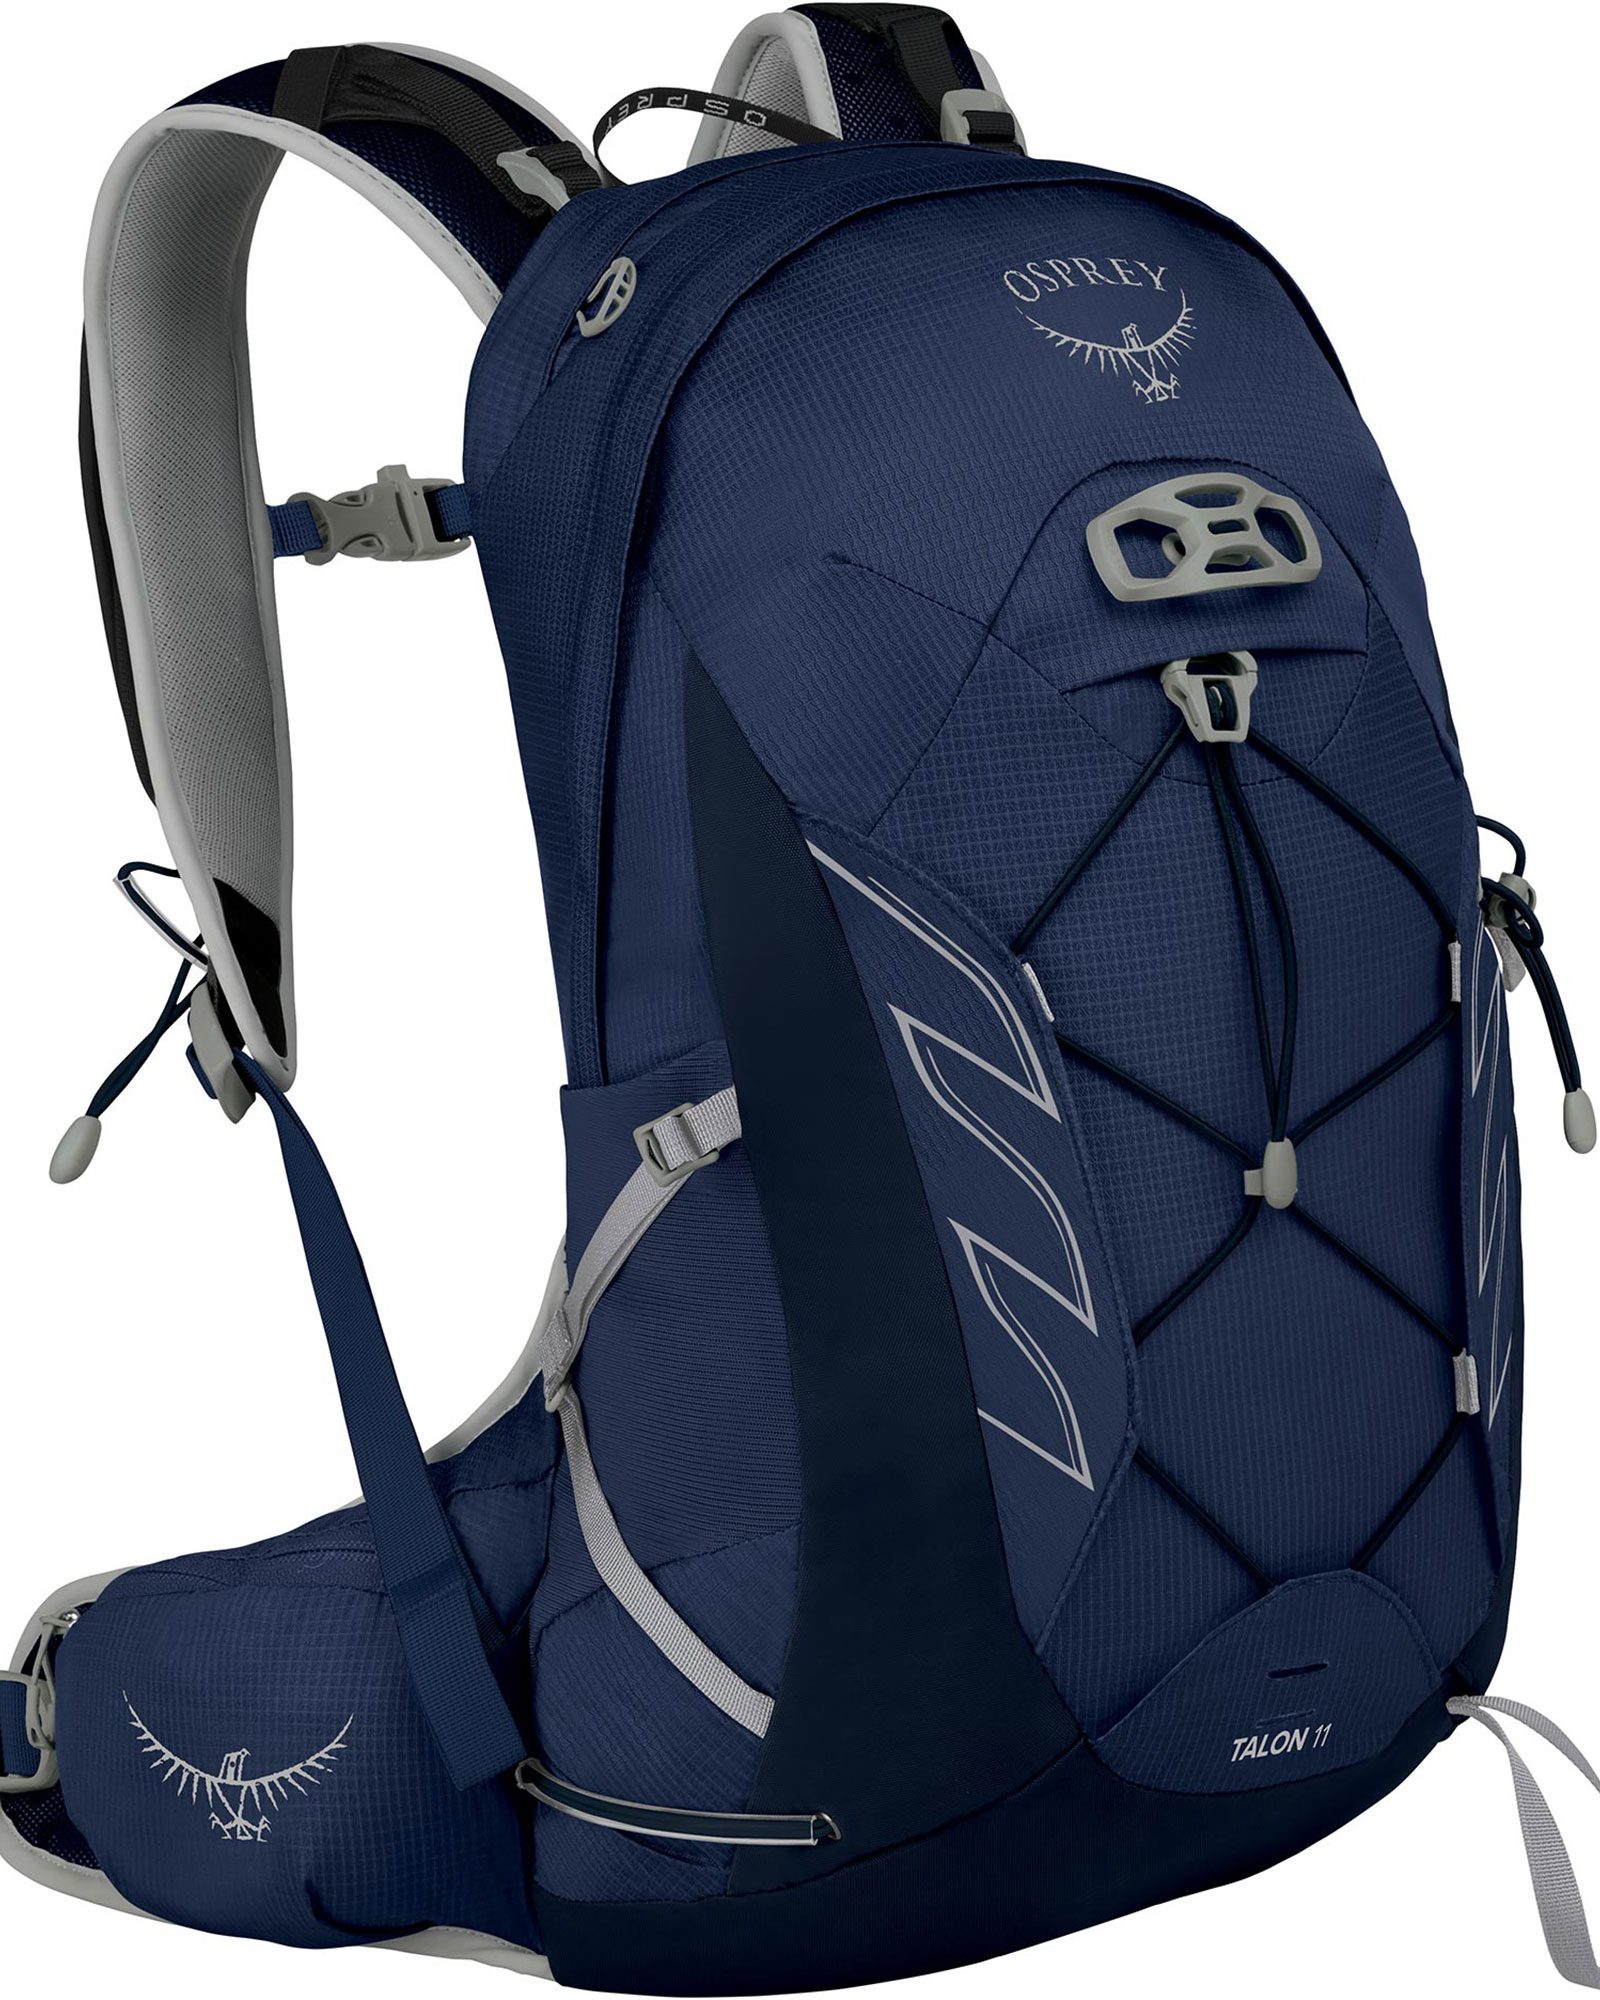 Osprey Talon 11 Backpack - Ceramic Blue L/XL